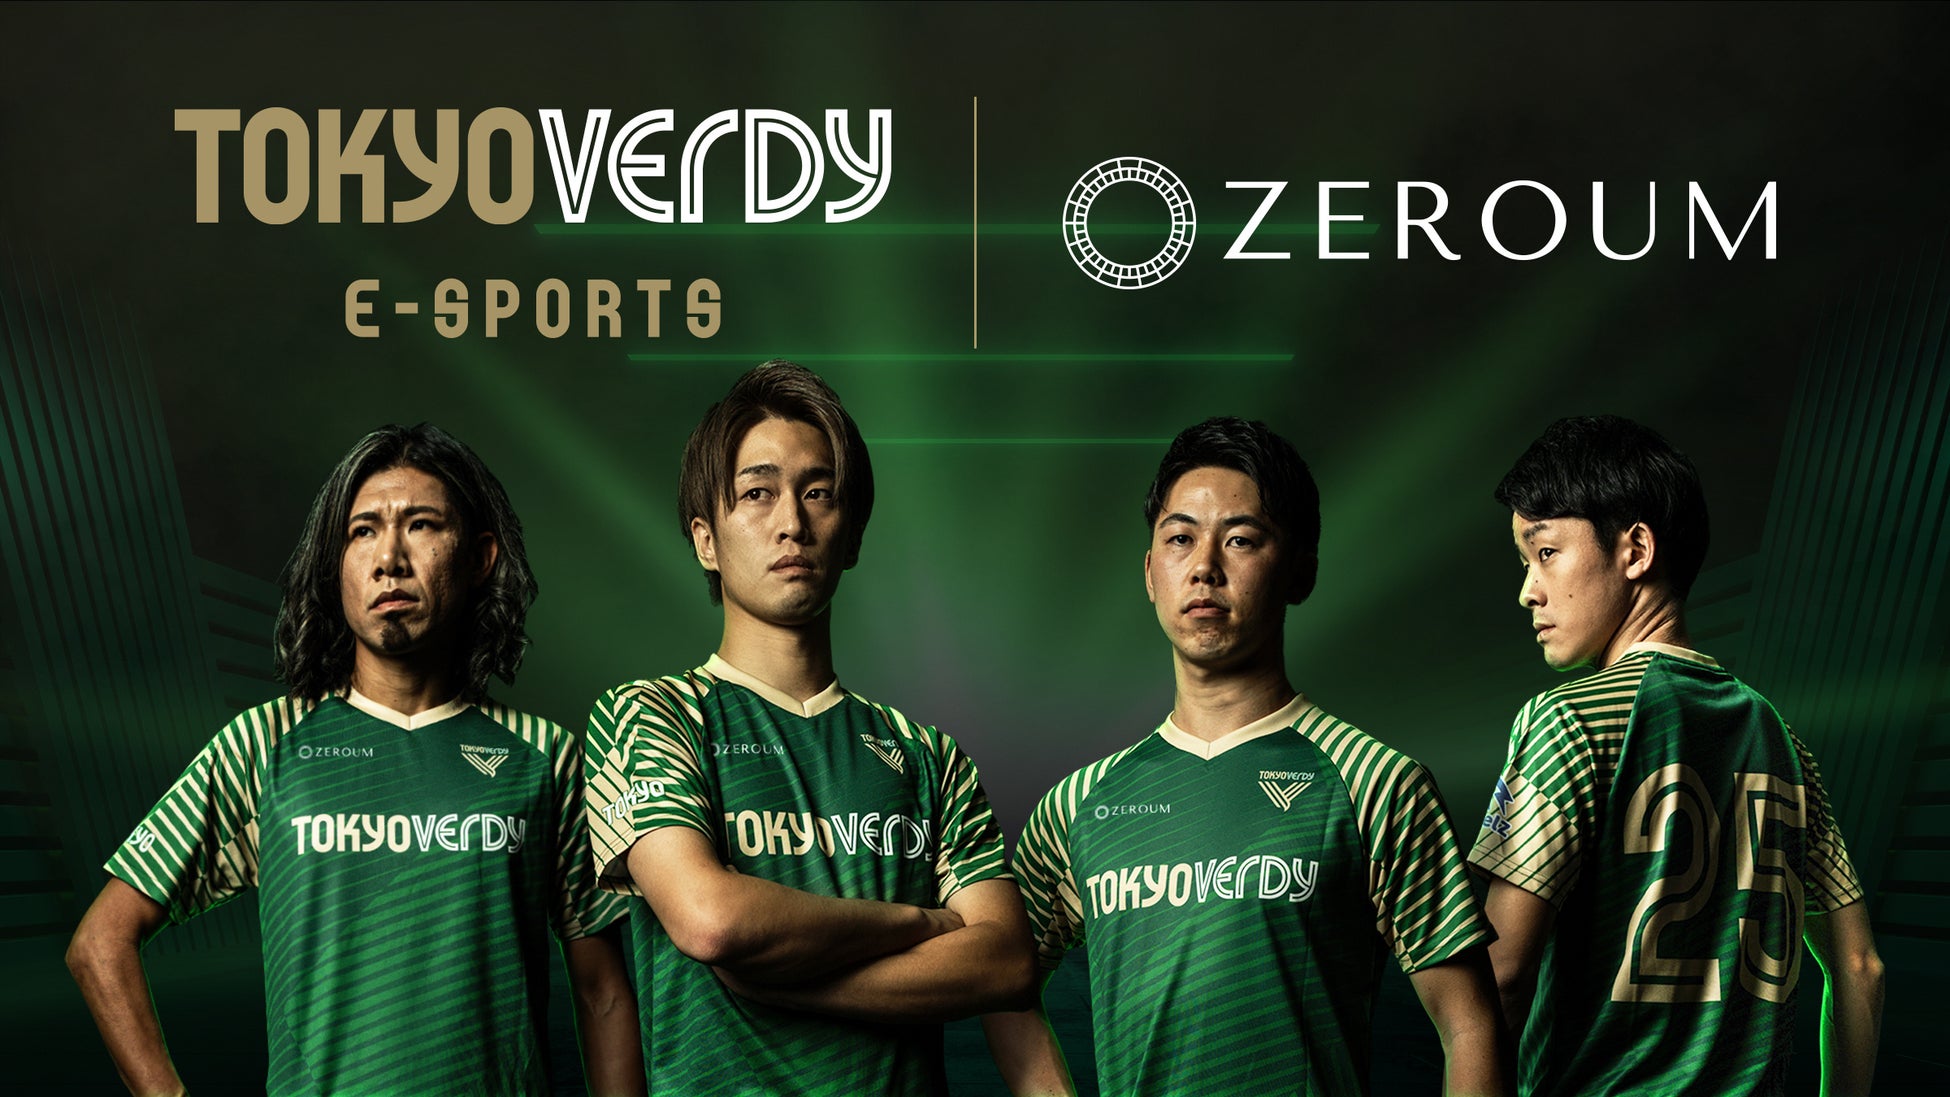 ZEROUM株式会社、東京ヴェルディeスポーツとのコーポレートパートナー契約締結を発表